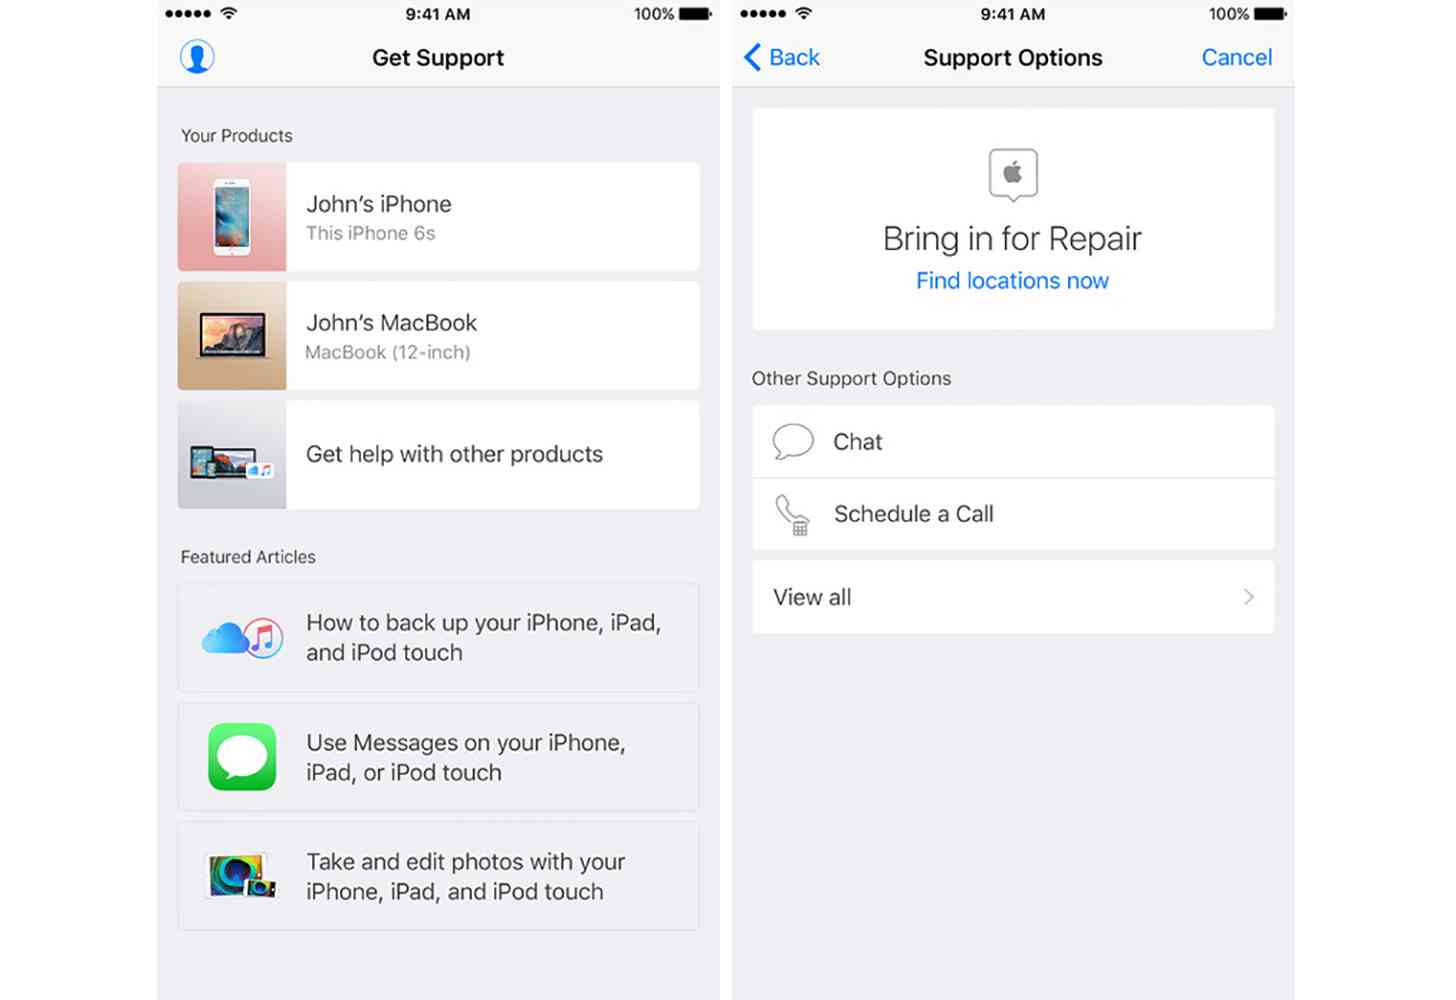 Apple Support iOS app screenshots